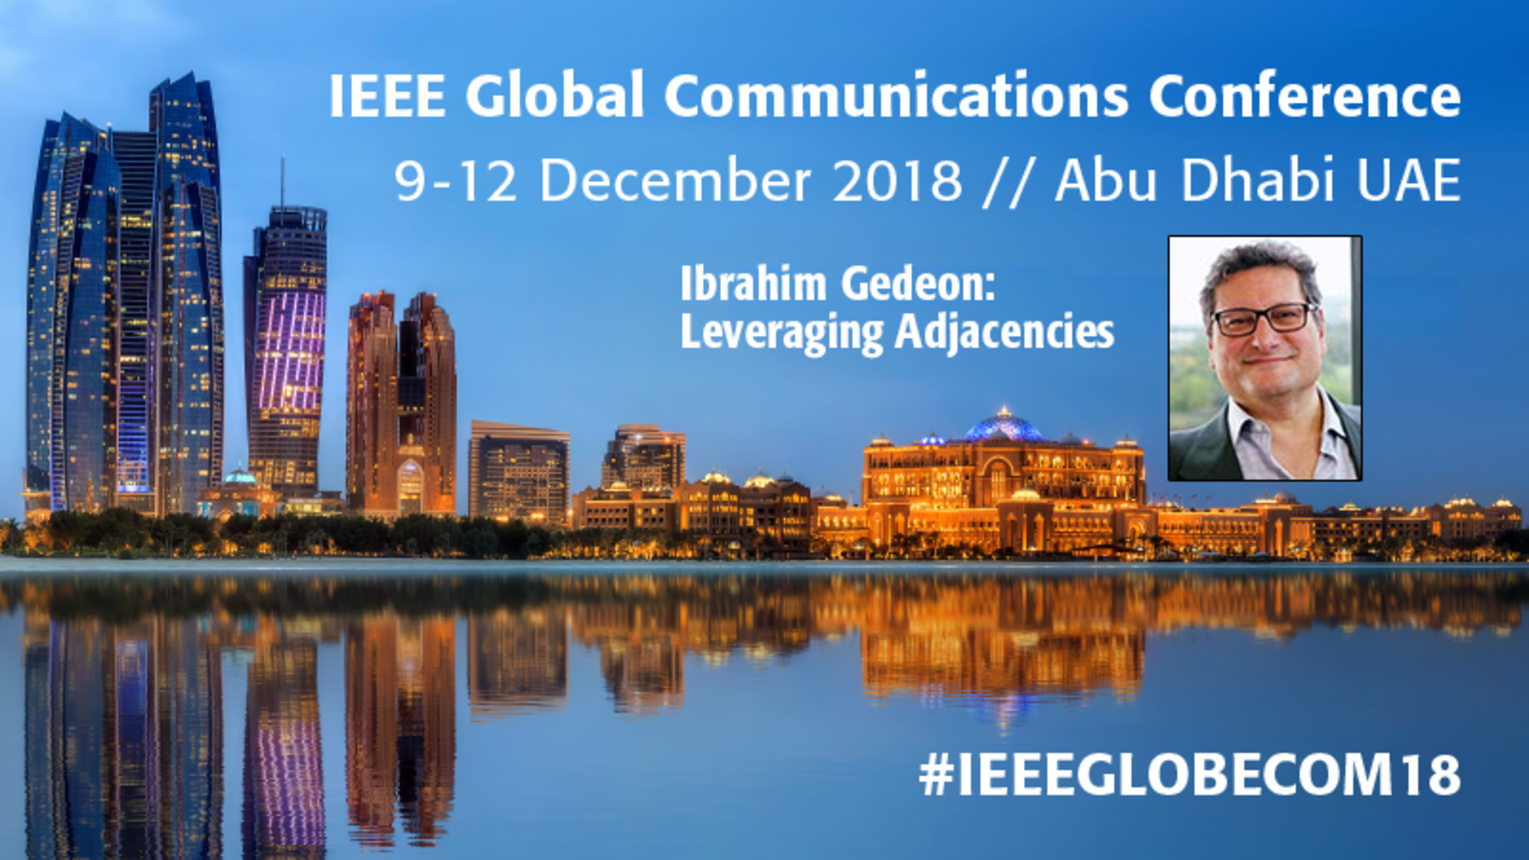 Leveraging Adjacencies - Ibrahim Gedeon at IEEE GLOBECOM 2018